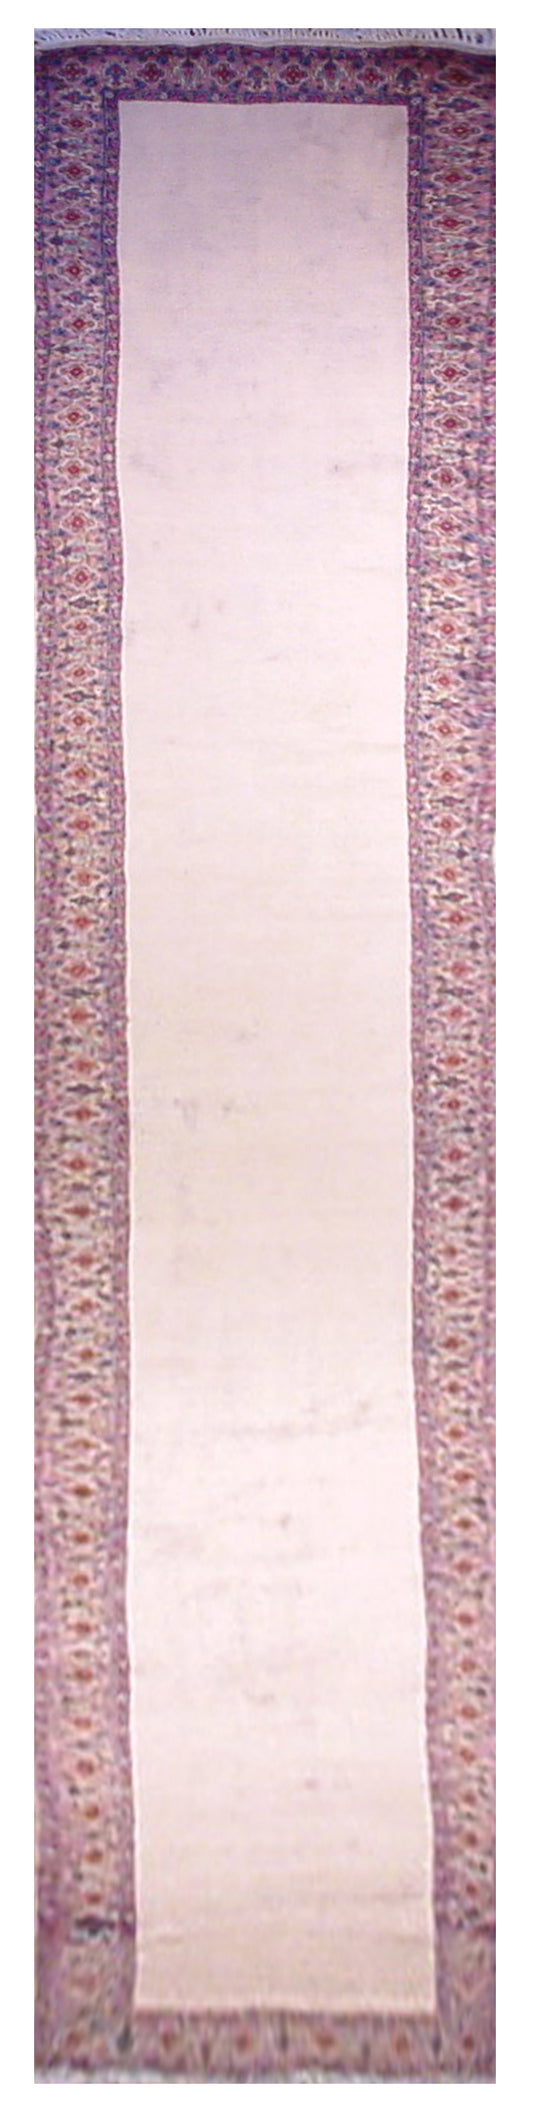 3'x20' Ivory Open Field Red Blue Border Vintage Persian Kerman Rug